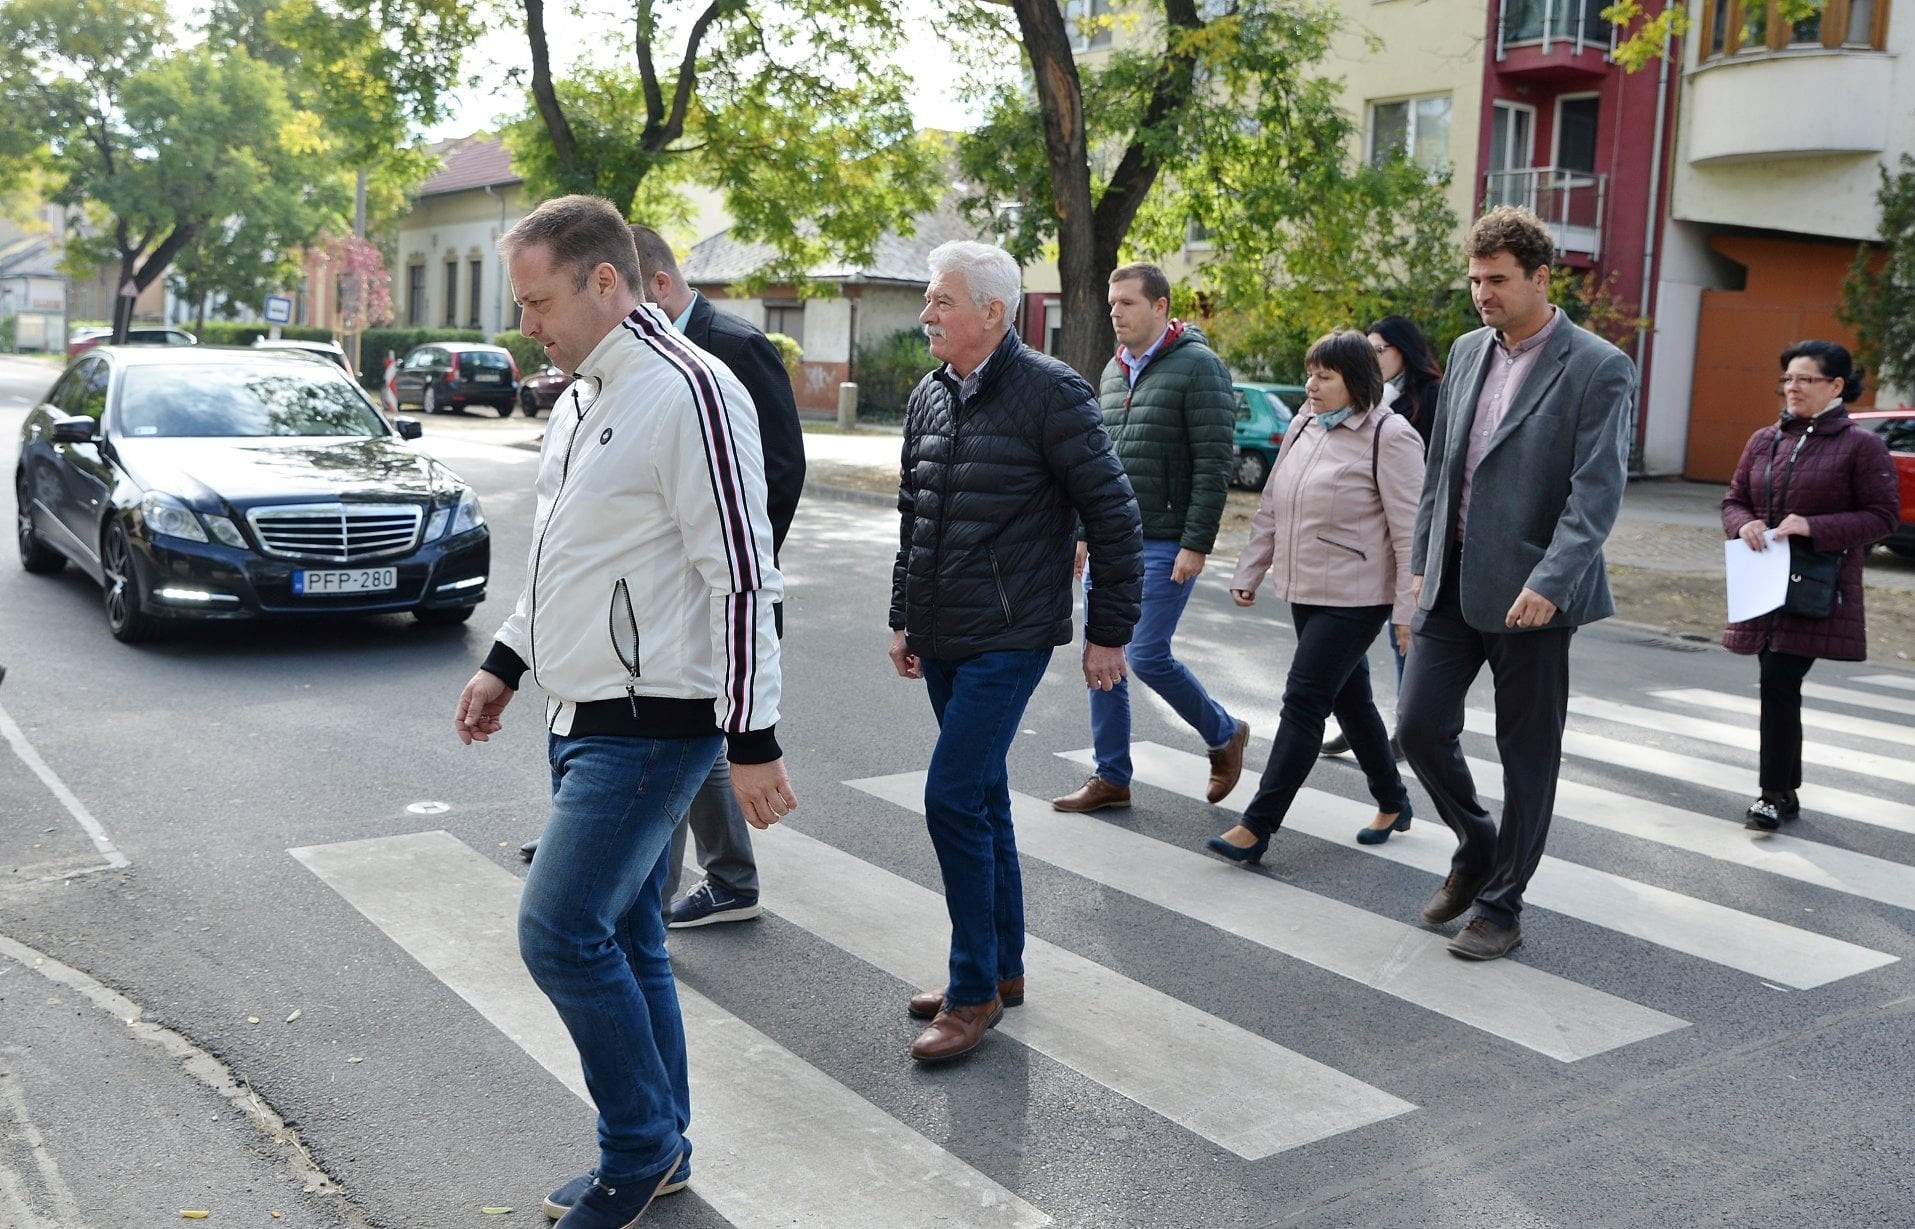 smart pedestrian crossing, Hungary, Budapest